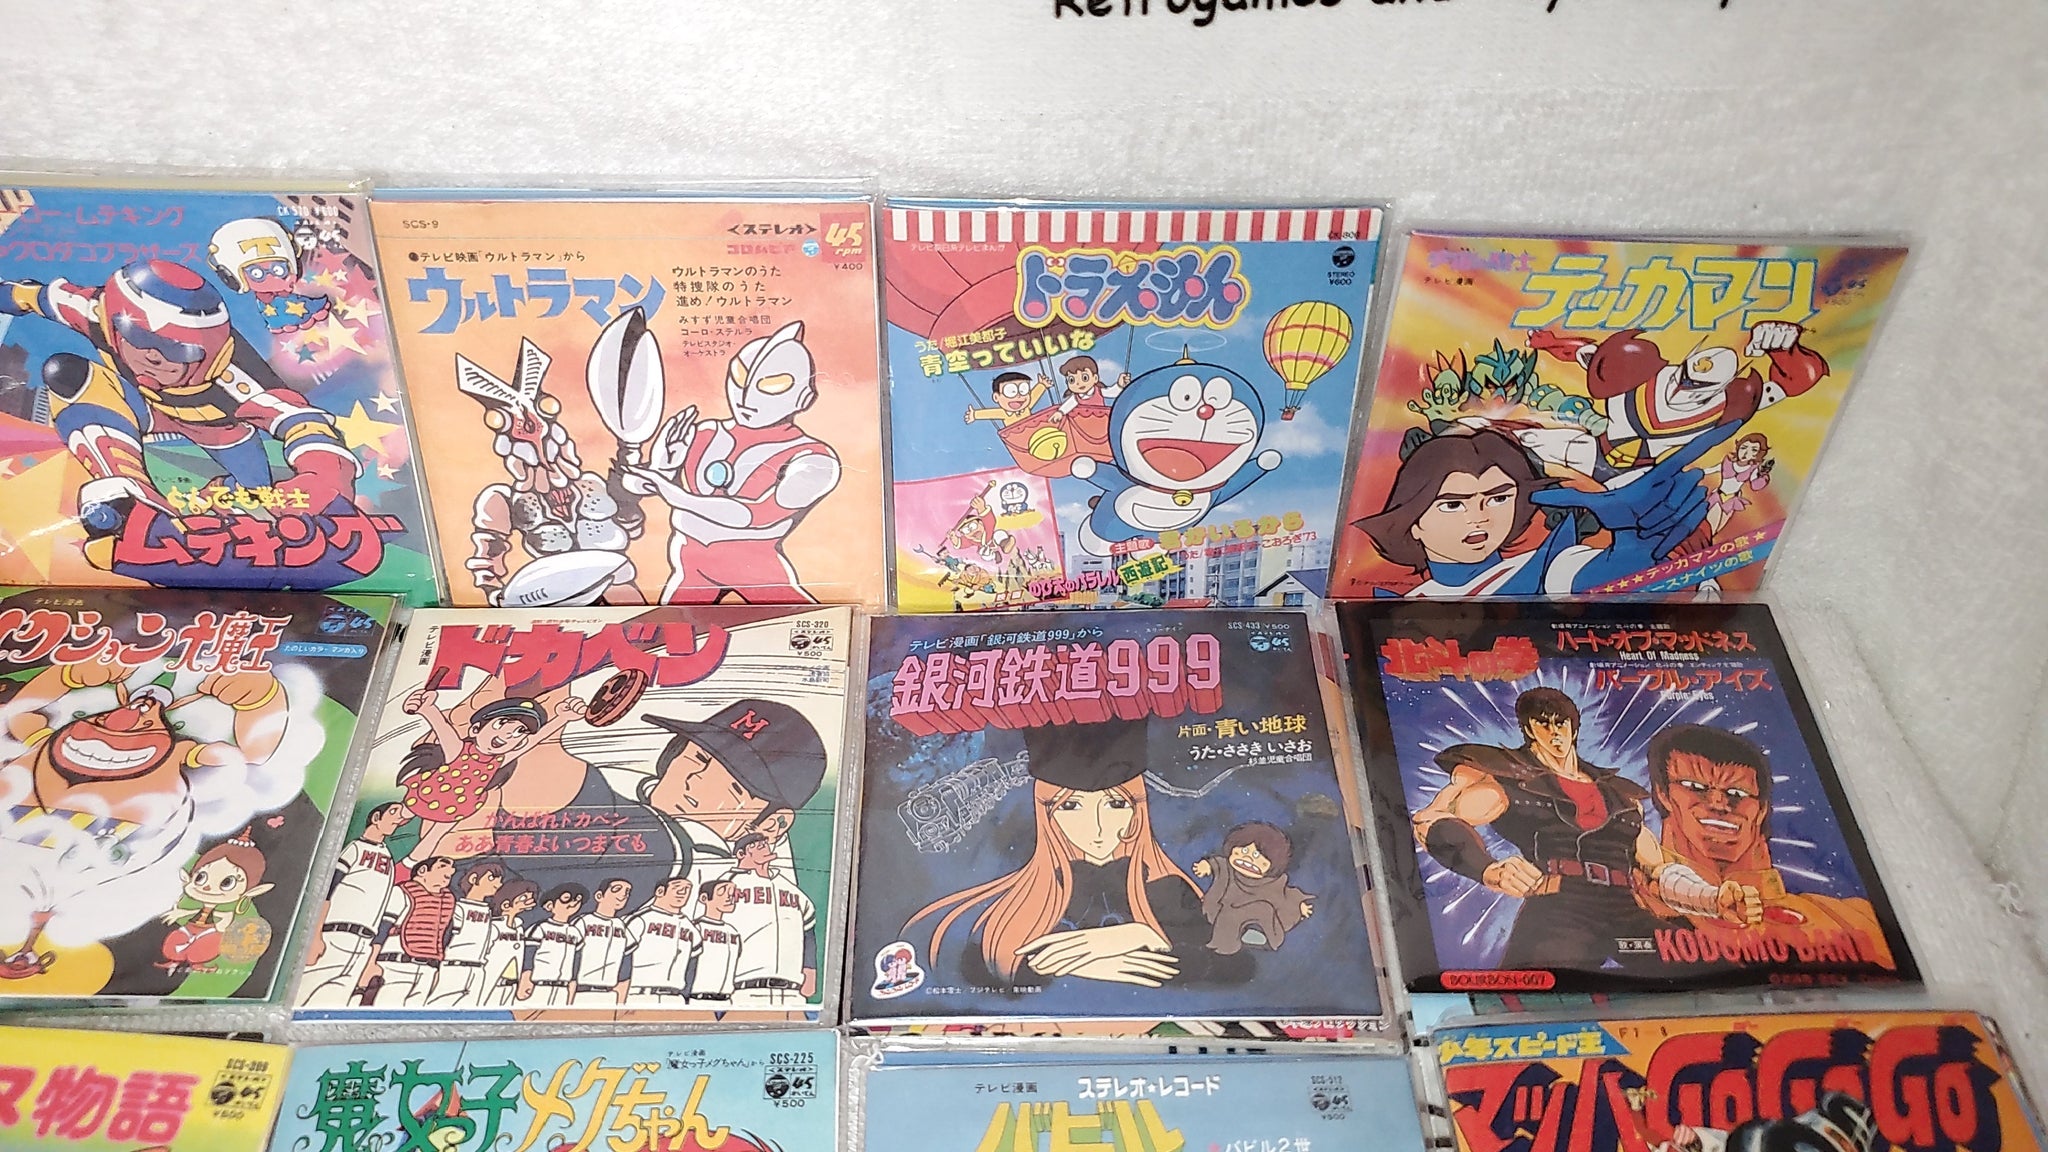 Anime CD Tv Myriad Colors Phantom World Character Song Mini Album Japan CD